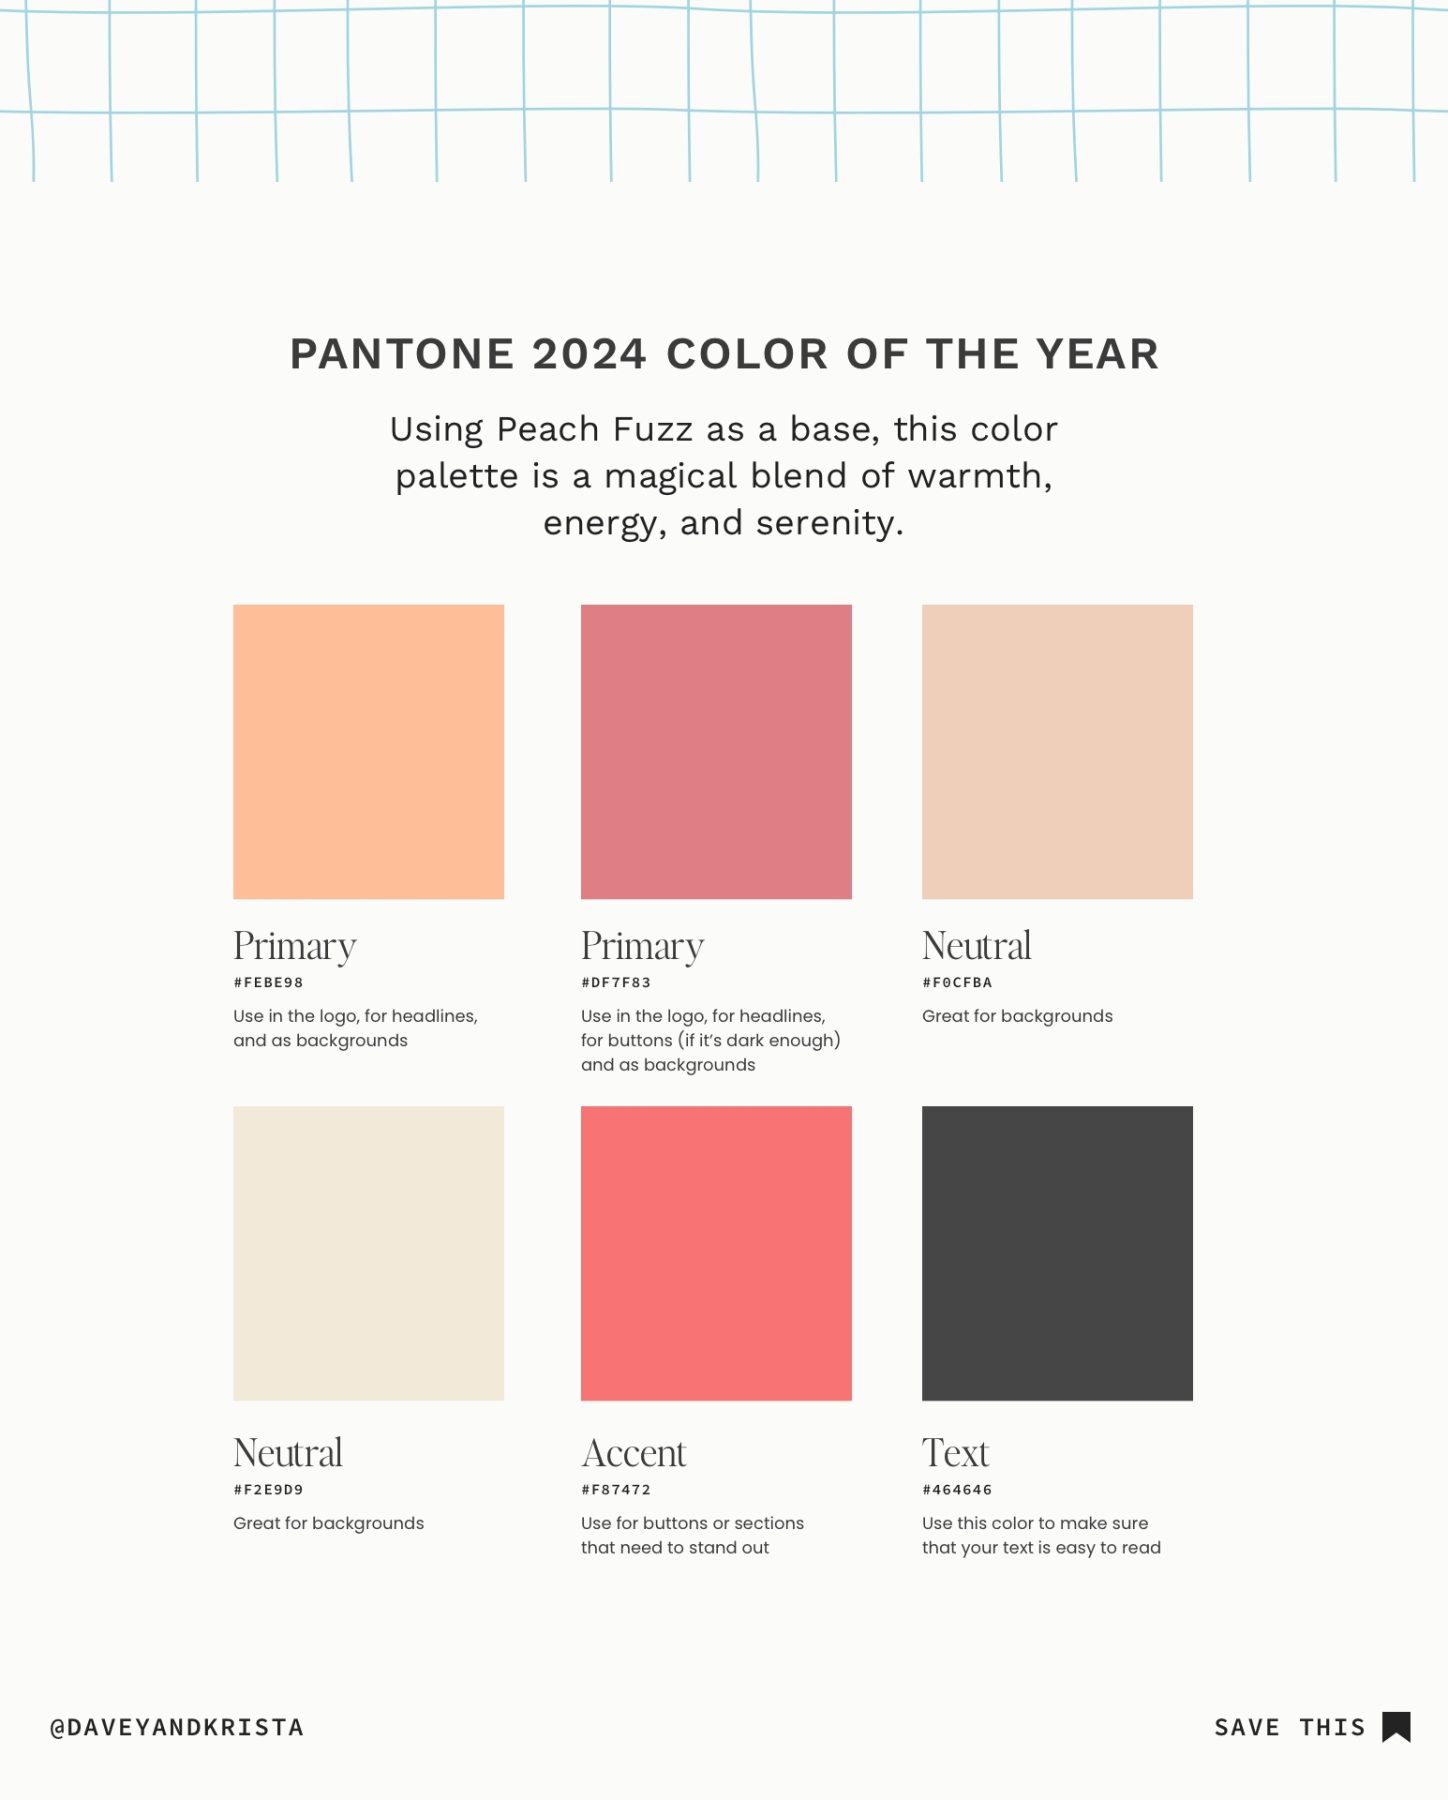 Pantone 2024 Color Palette for websites and brands.